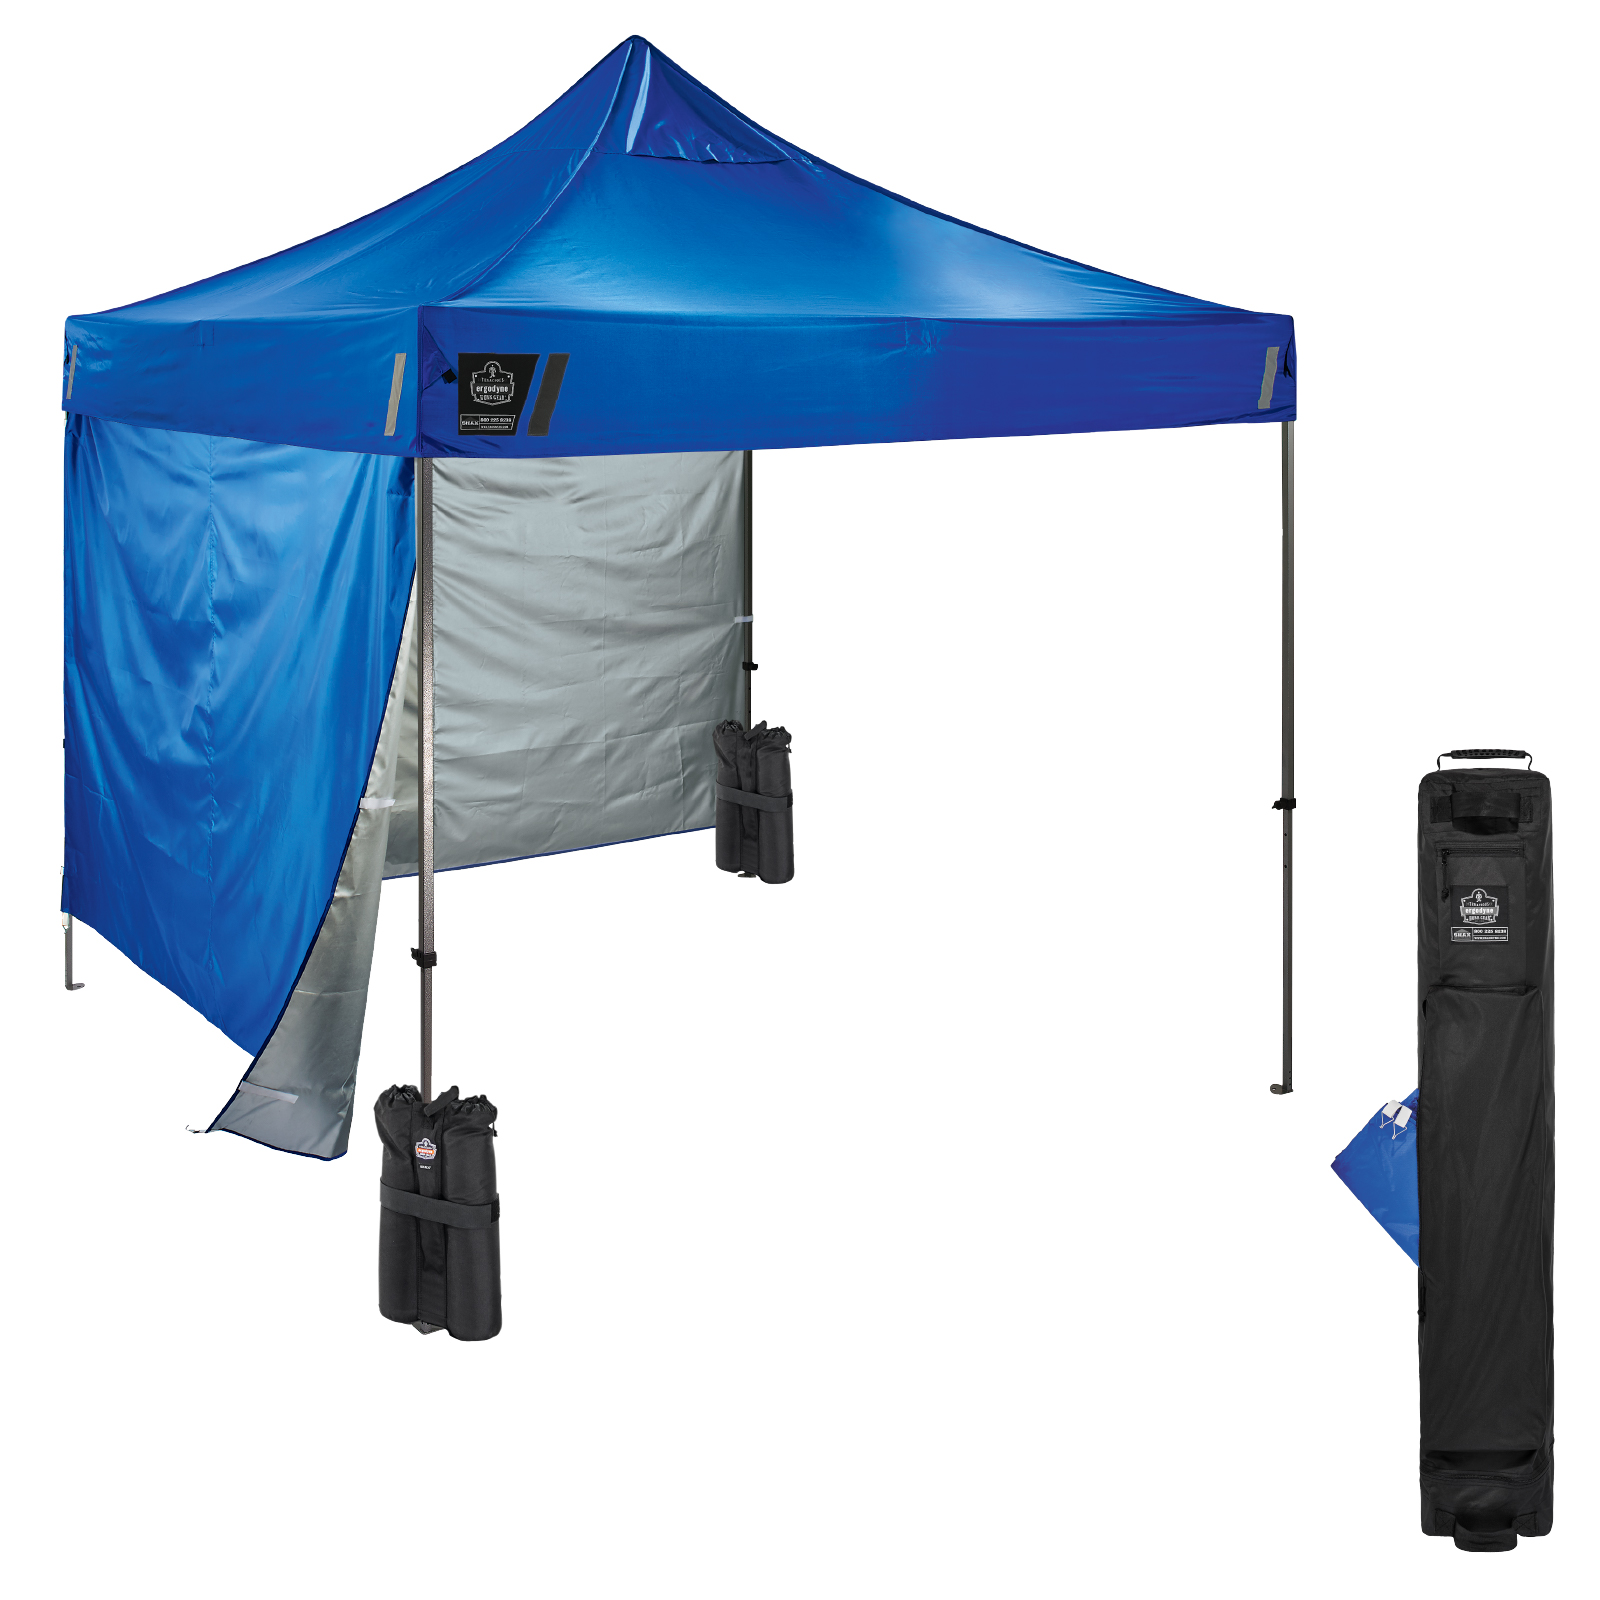 Ergodyne SHAX 6051 Heavy-Duty 10 Foot x 10 Foot Pop-Up Tent from GME Supply